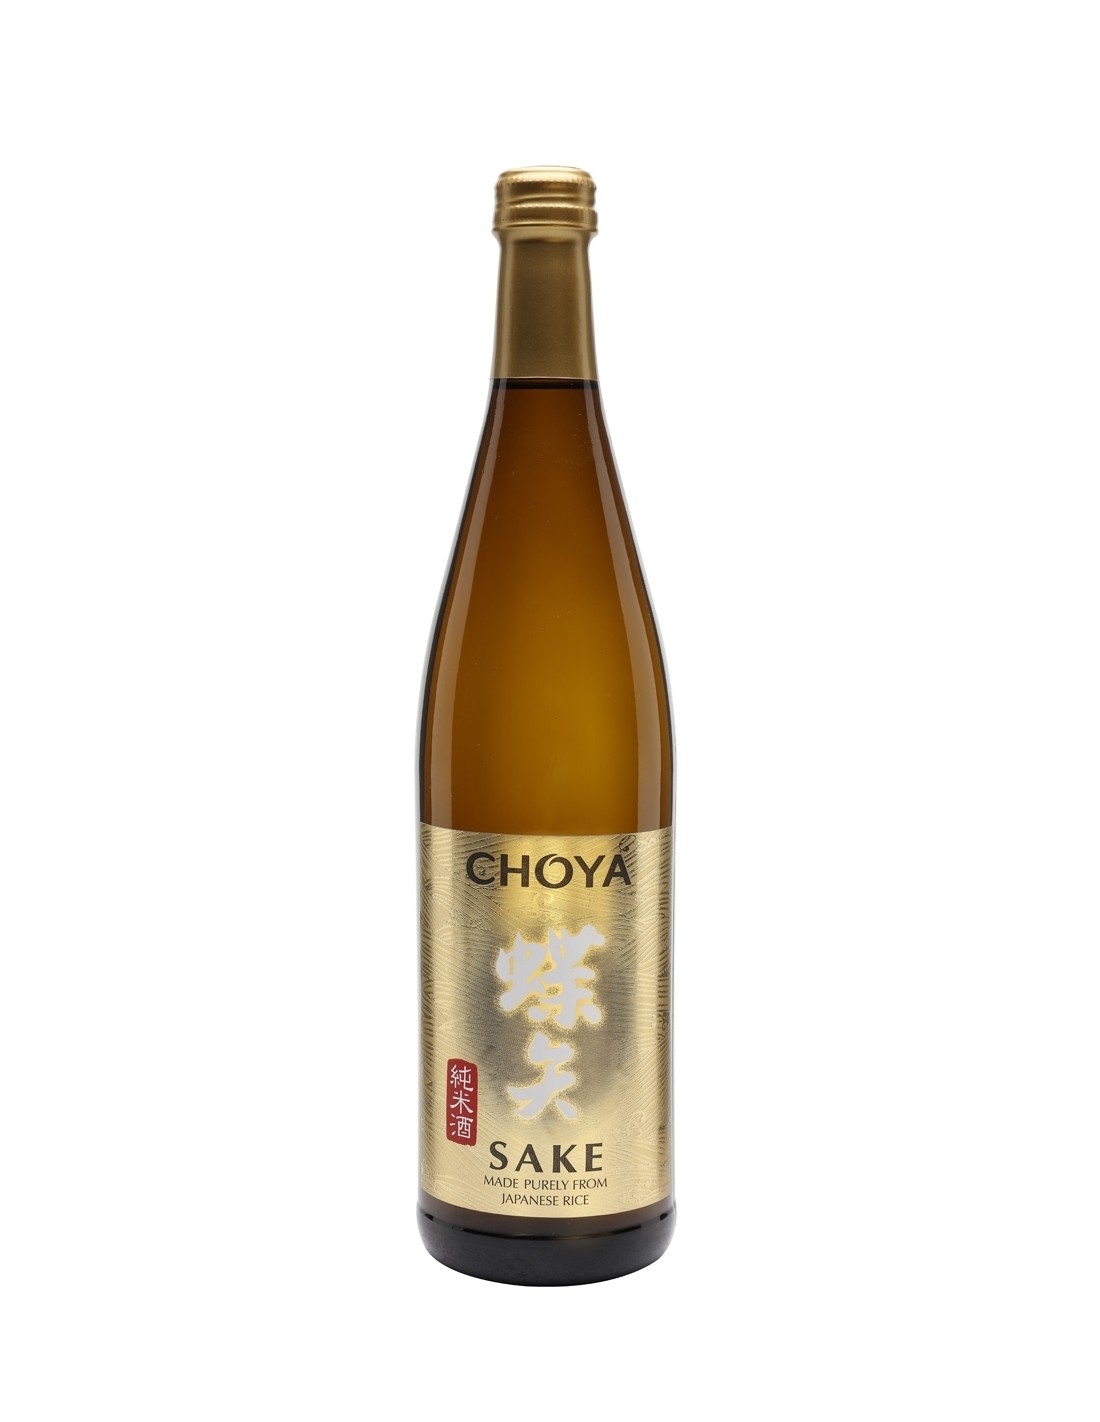 Bautura traditionala Choya Sake, 14.5% alc., 0.75L, Japonia alcooldiscount.ro